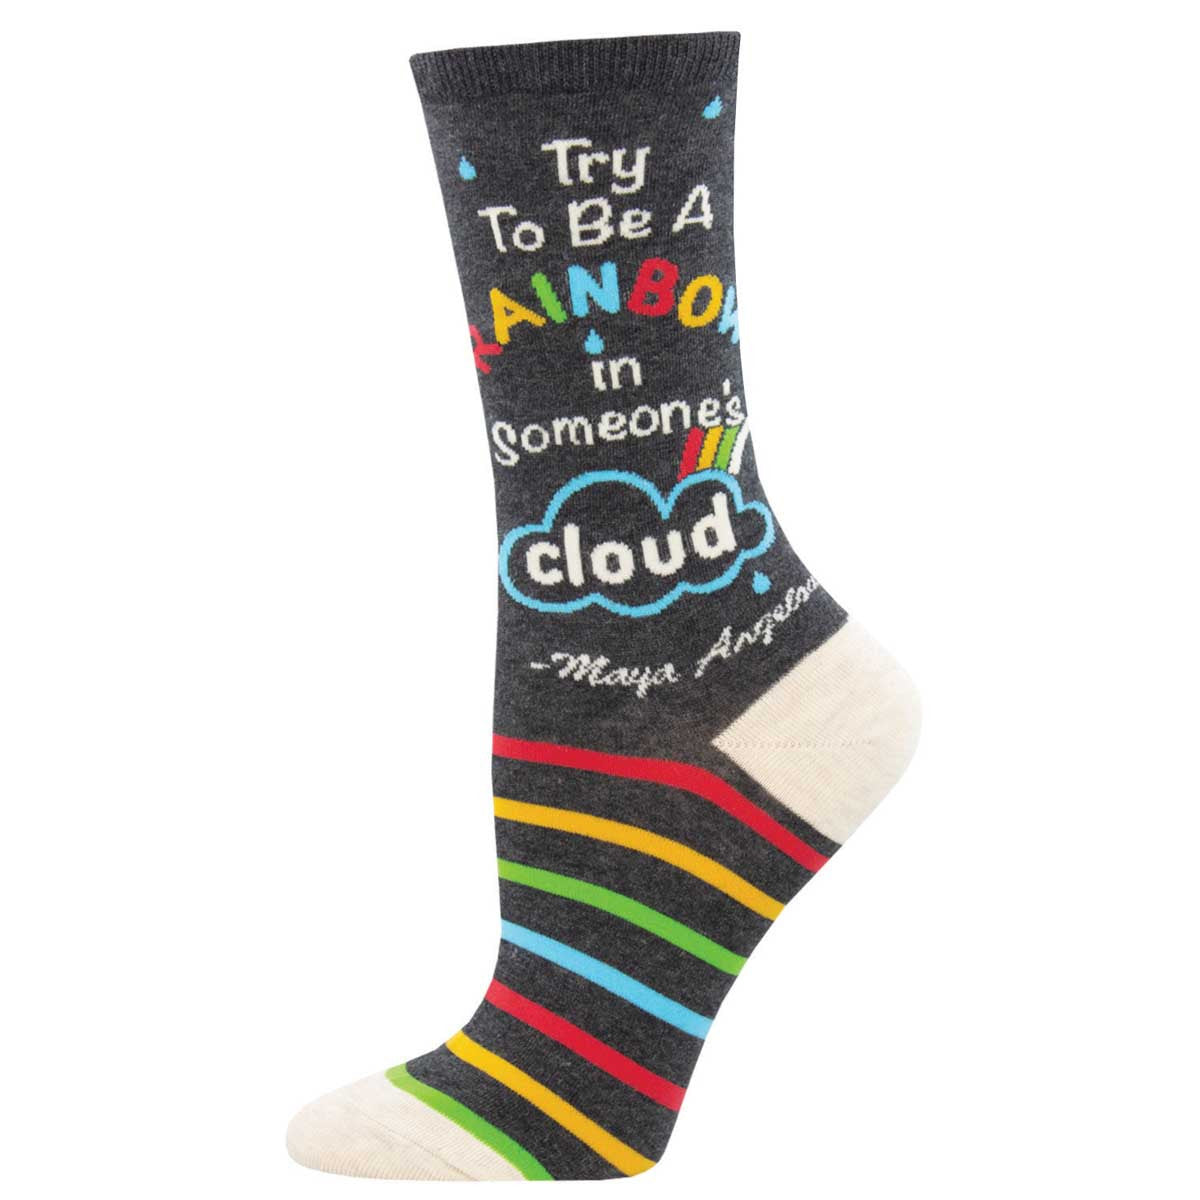 Maya Angelou 'Rainbow in Someone's Cloud' Women's Socks